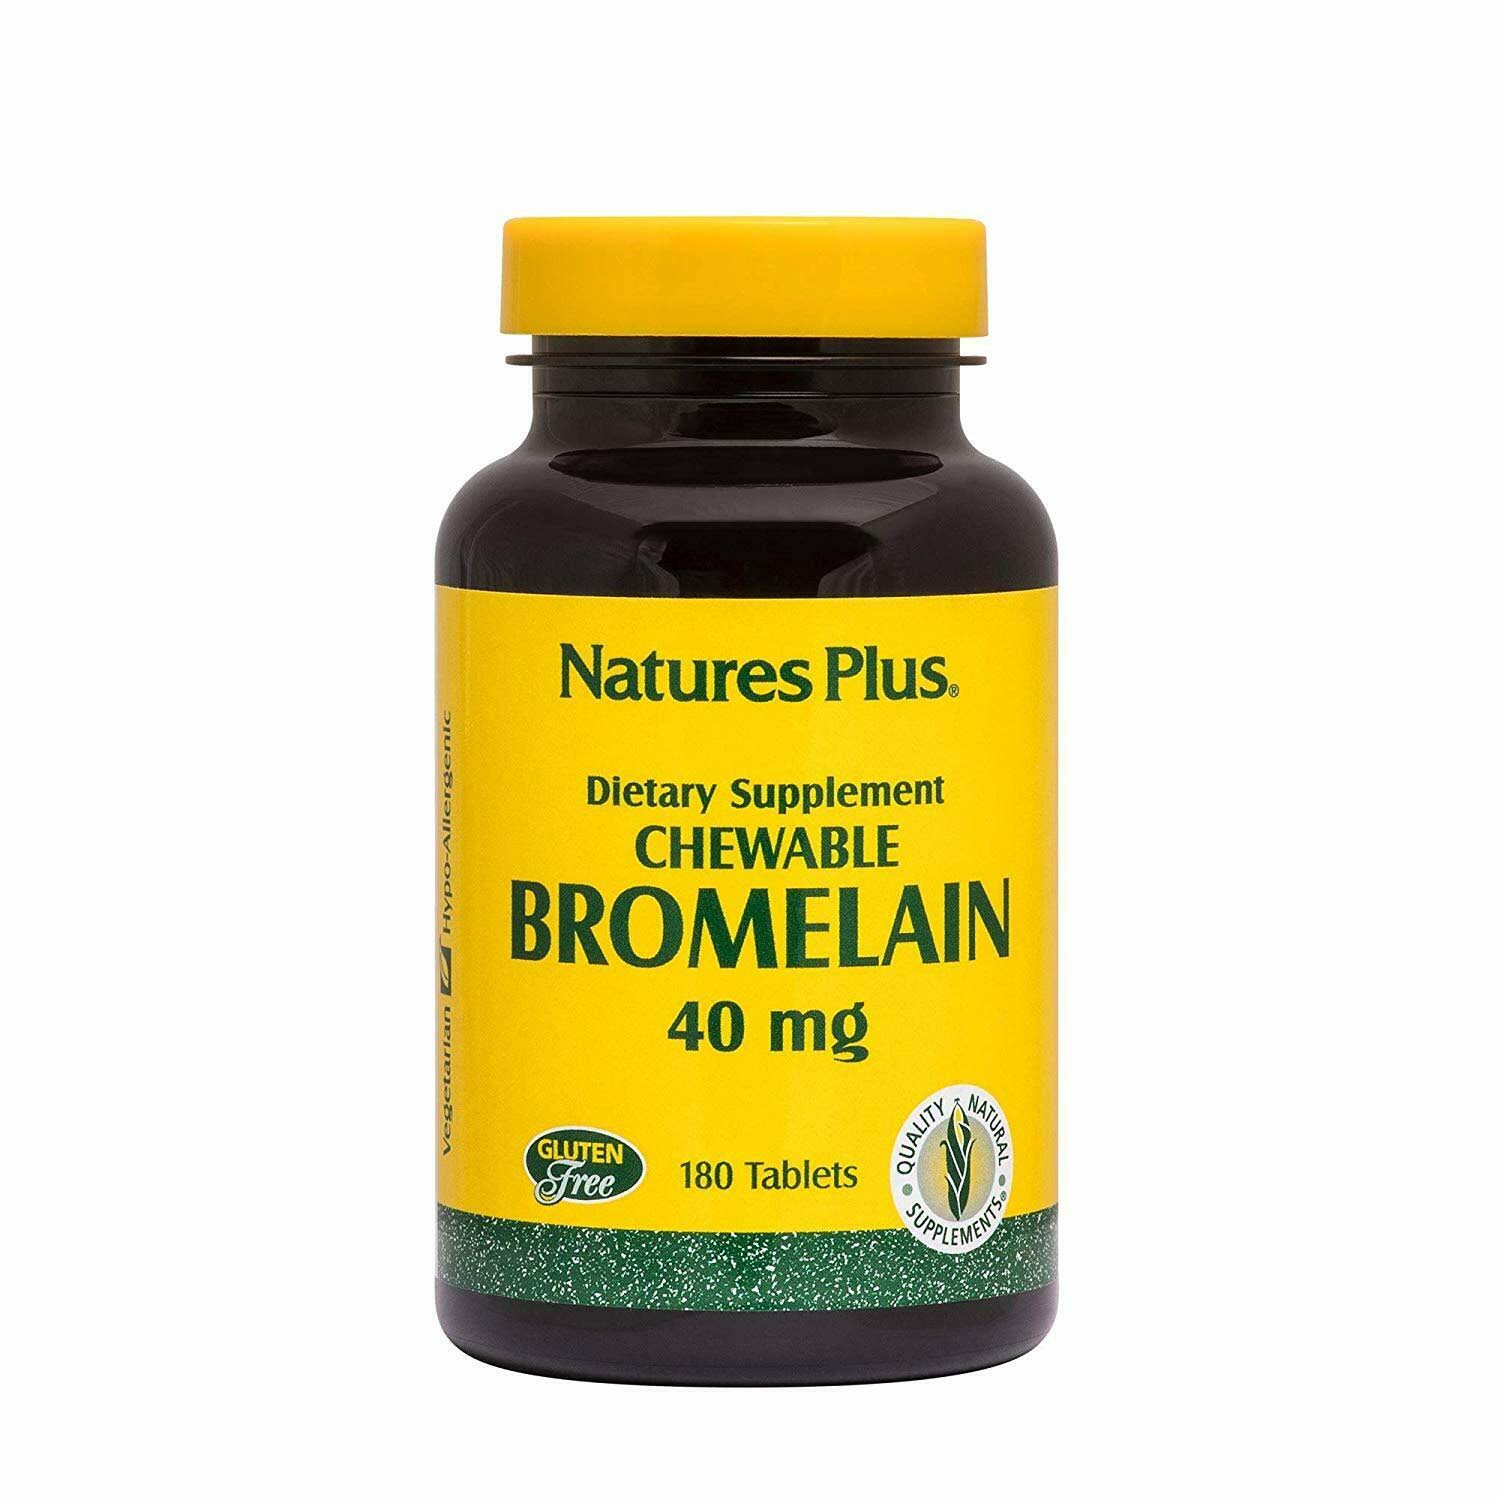 Nature's Plus Chewable Bromelain Supplement - 40 mg, 180 Tablets